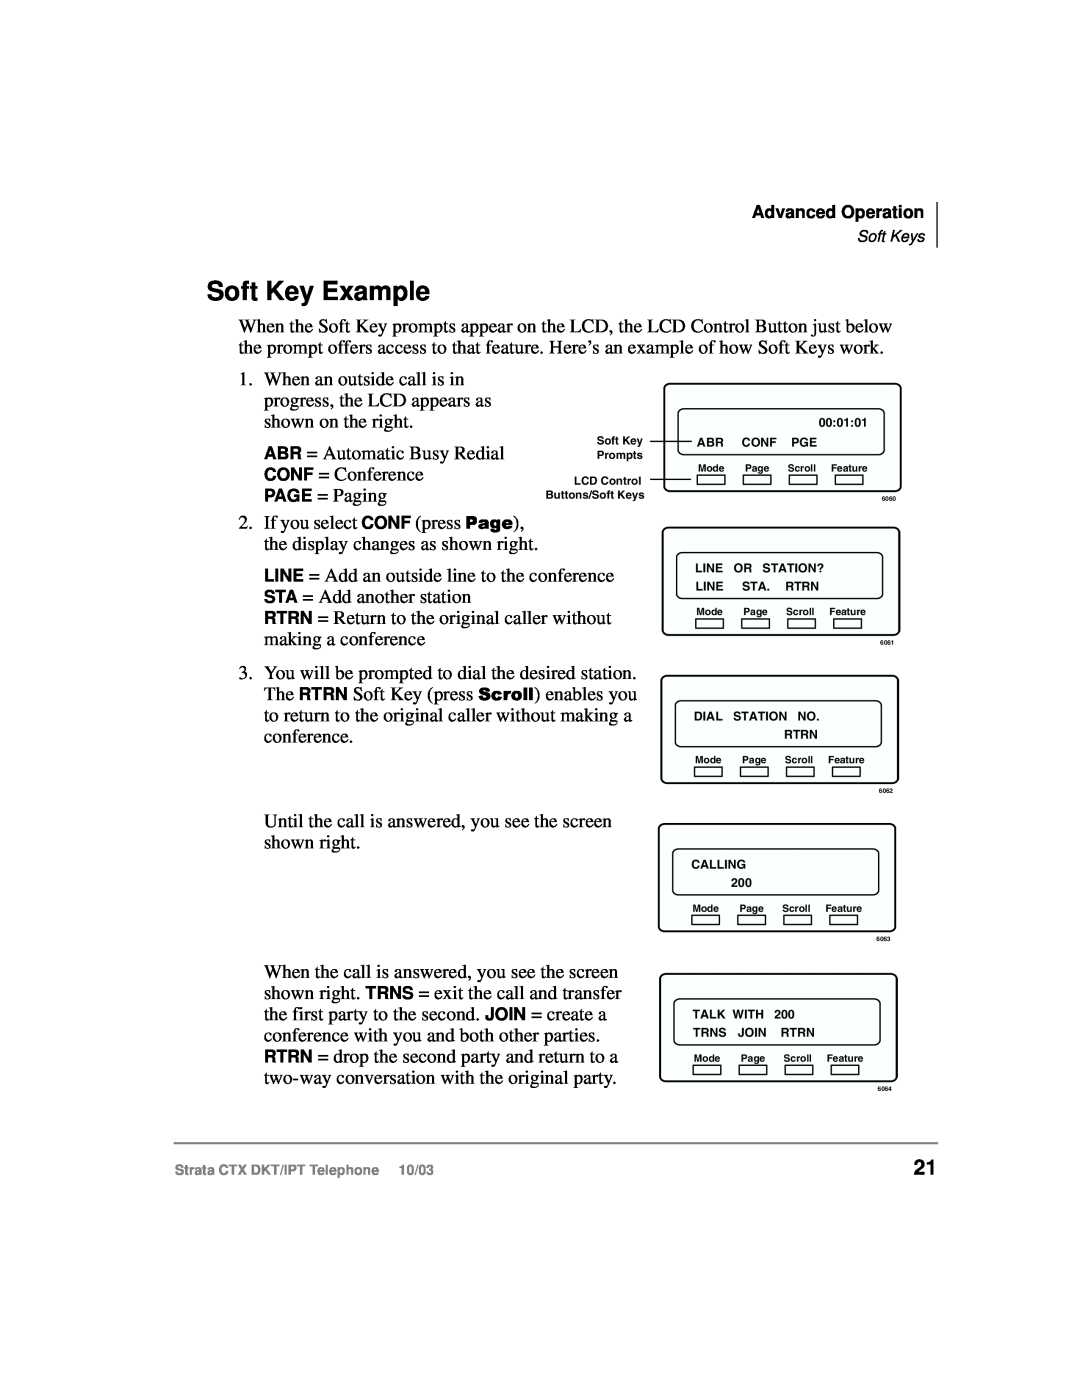 Toshiba DKT, IPT manual Soft Key Example 